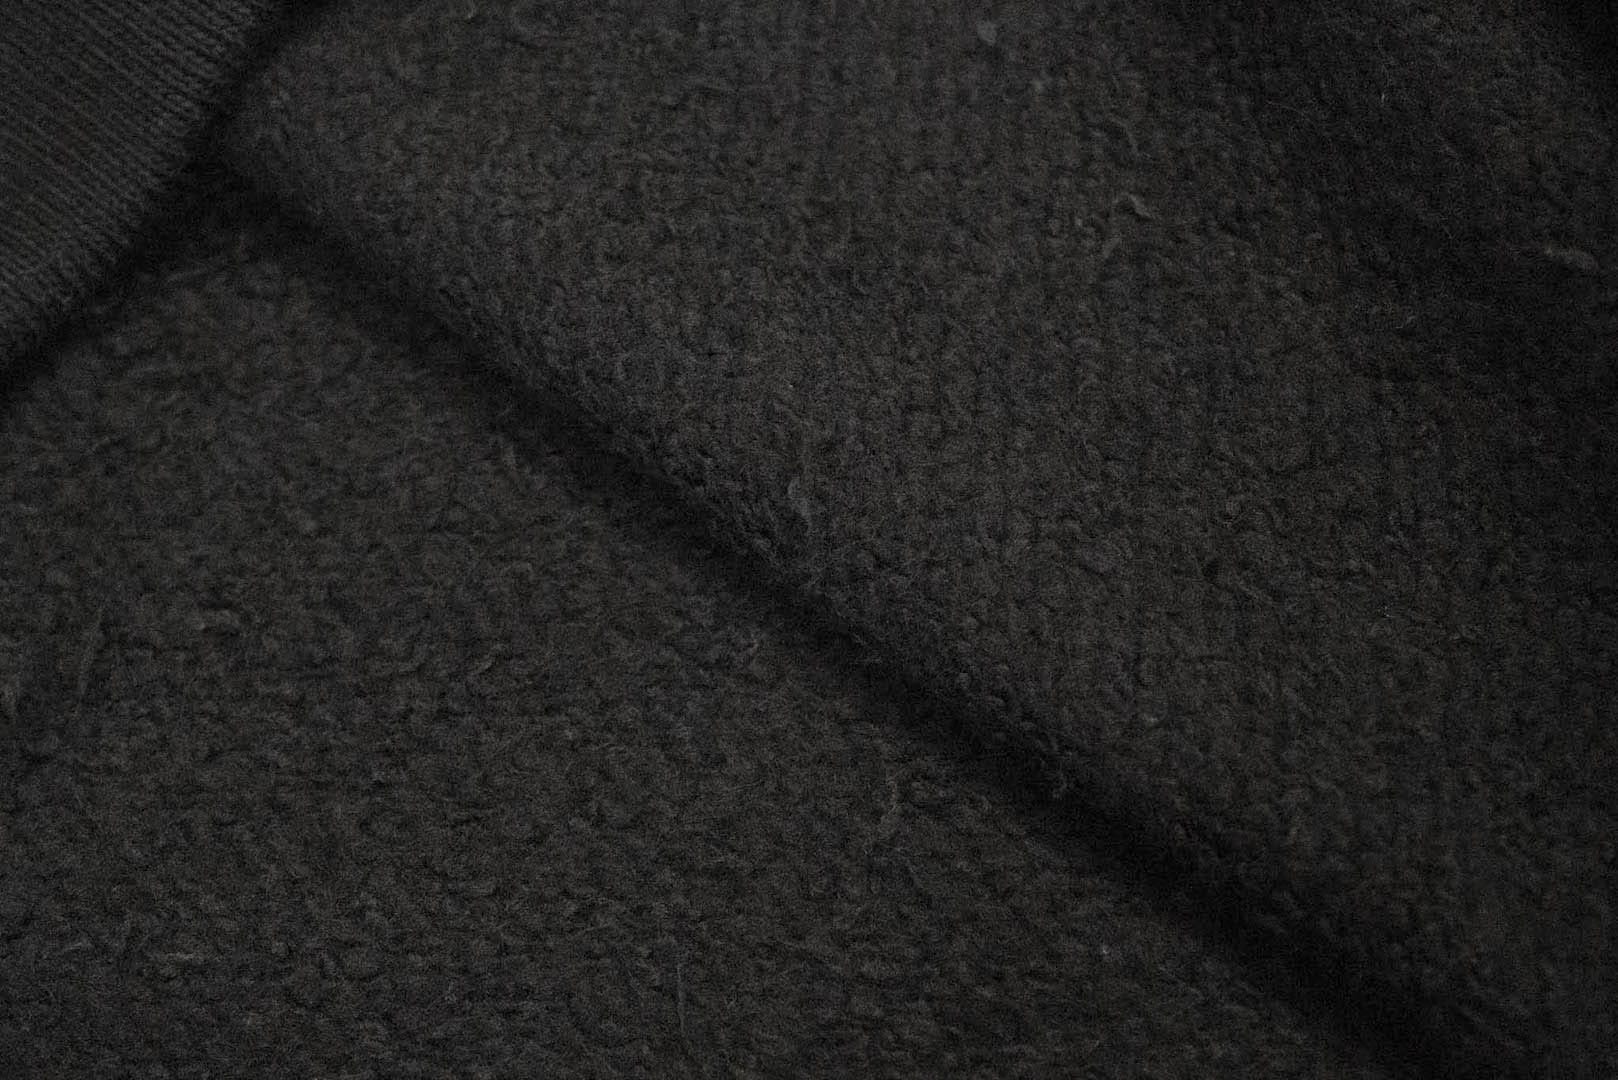 John Gluckow X Warehouse Co. 10oz Loopwheeled 'College' Sweatshirt (Black)